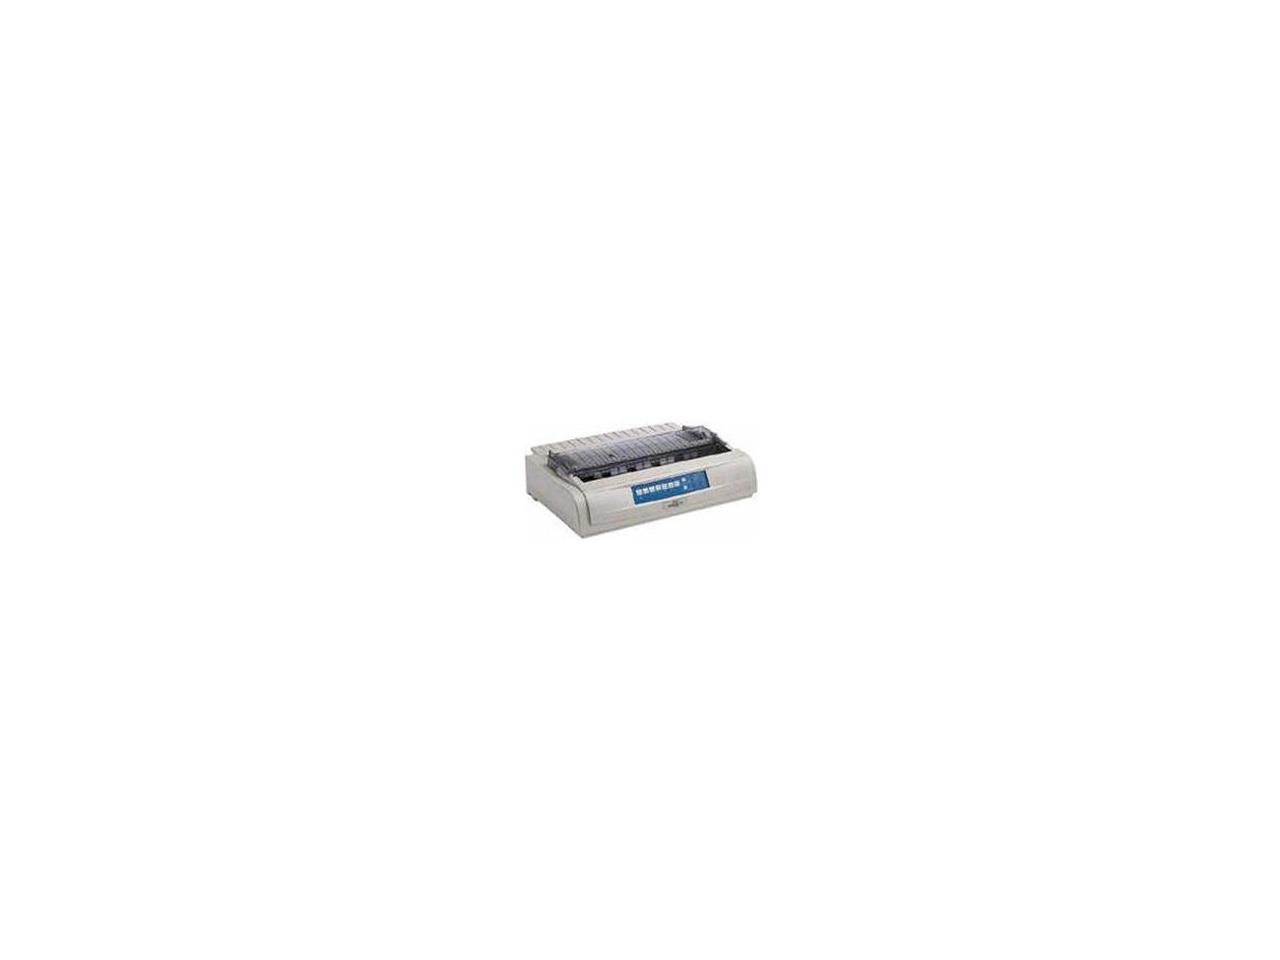 OKIDATA MICROLINE 420 (62418702) - Parallel, USB 9 pin 230V Up to 570cps 240 x 216 Dot Matrix Printer